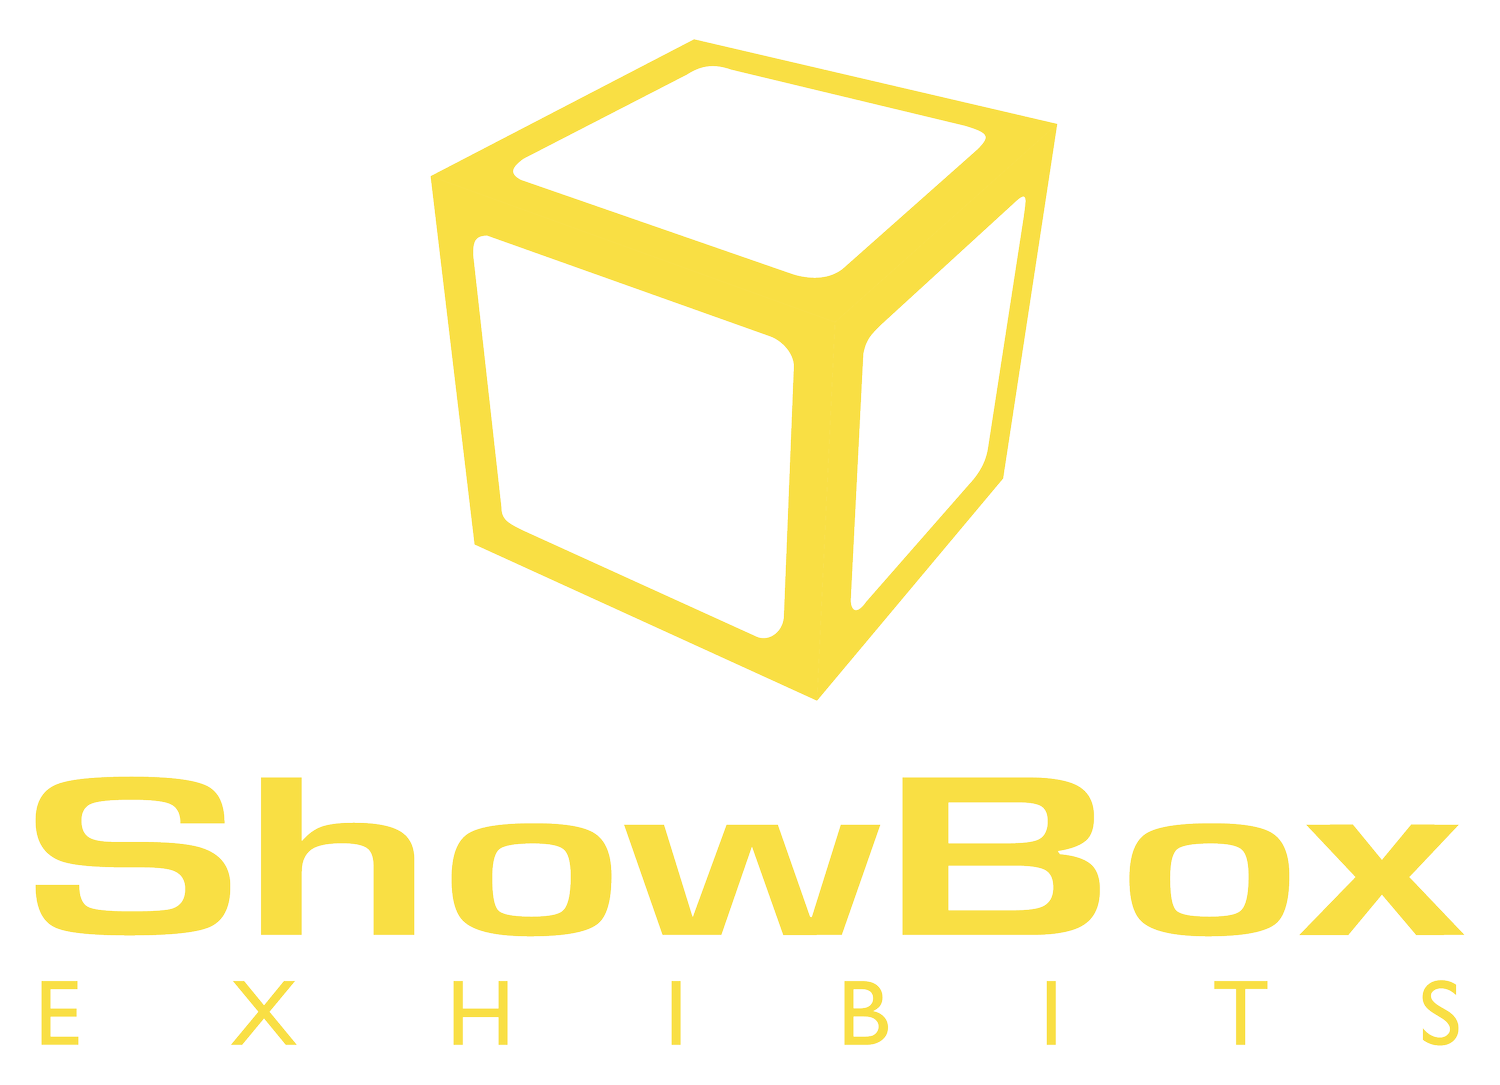 Showbox Exhibits - Your Trade Show Exhibit Experts